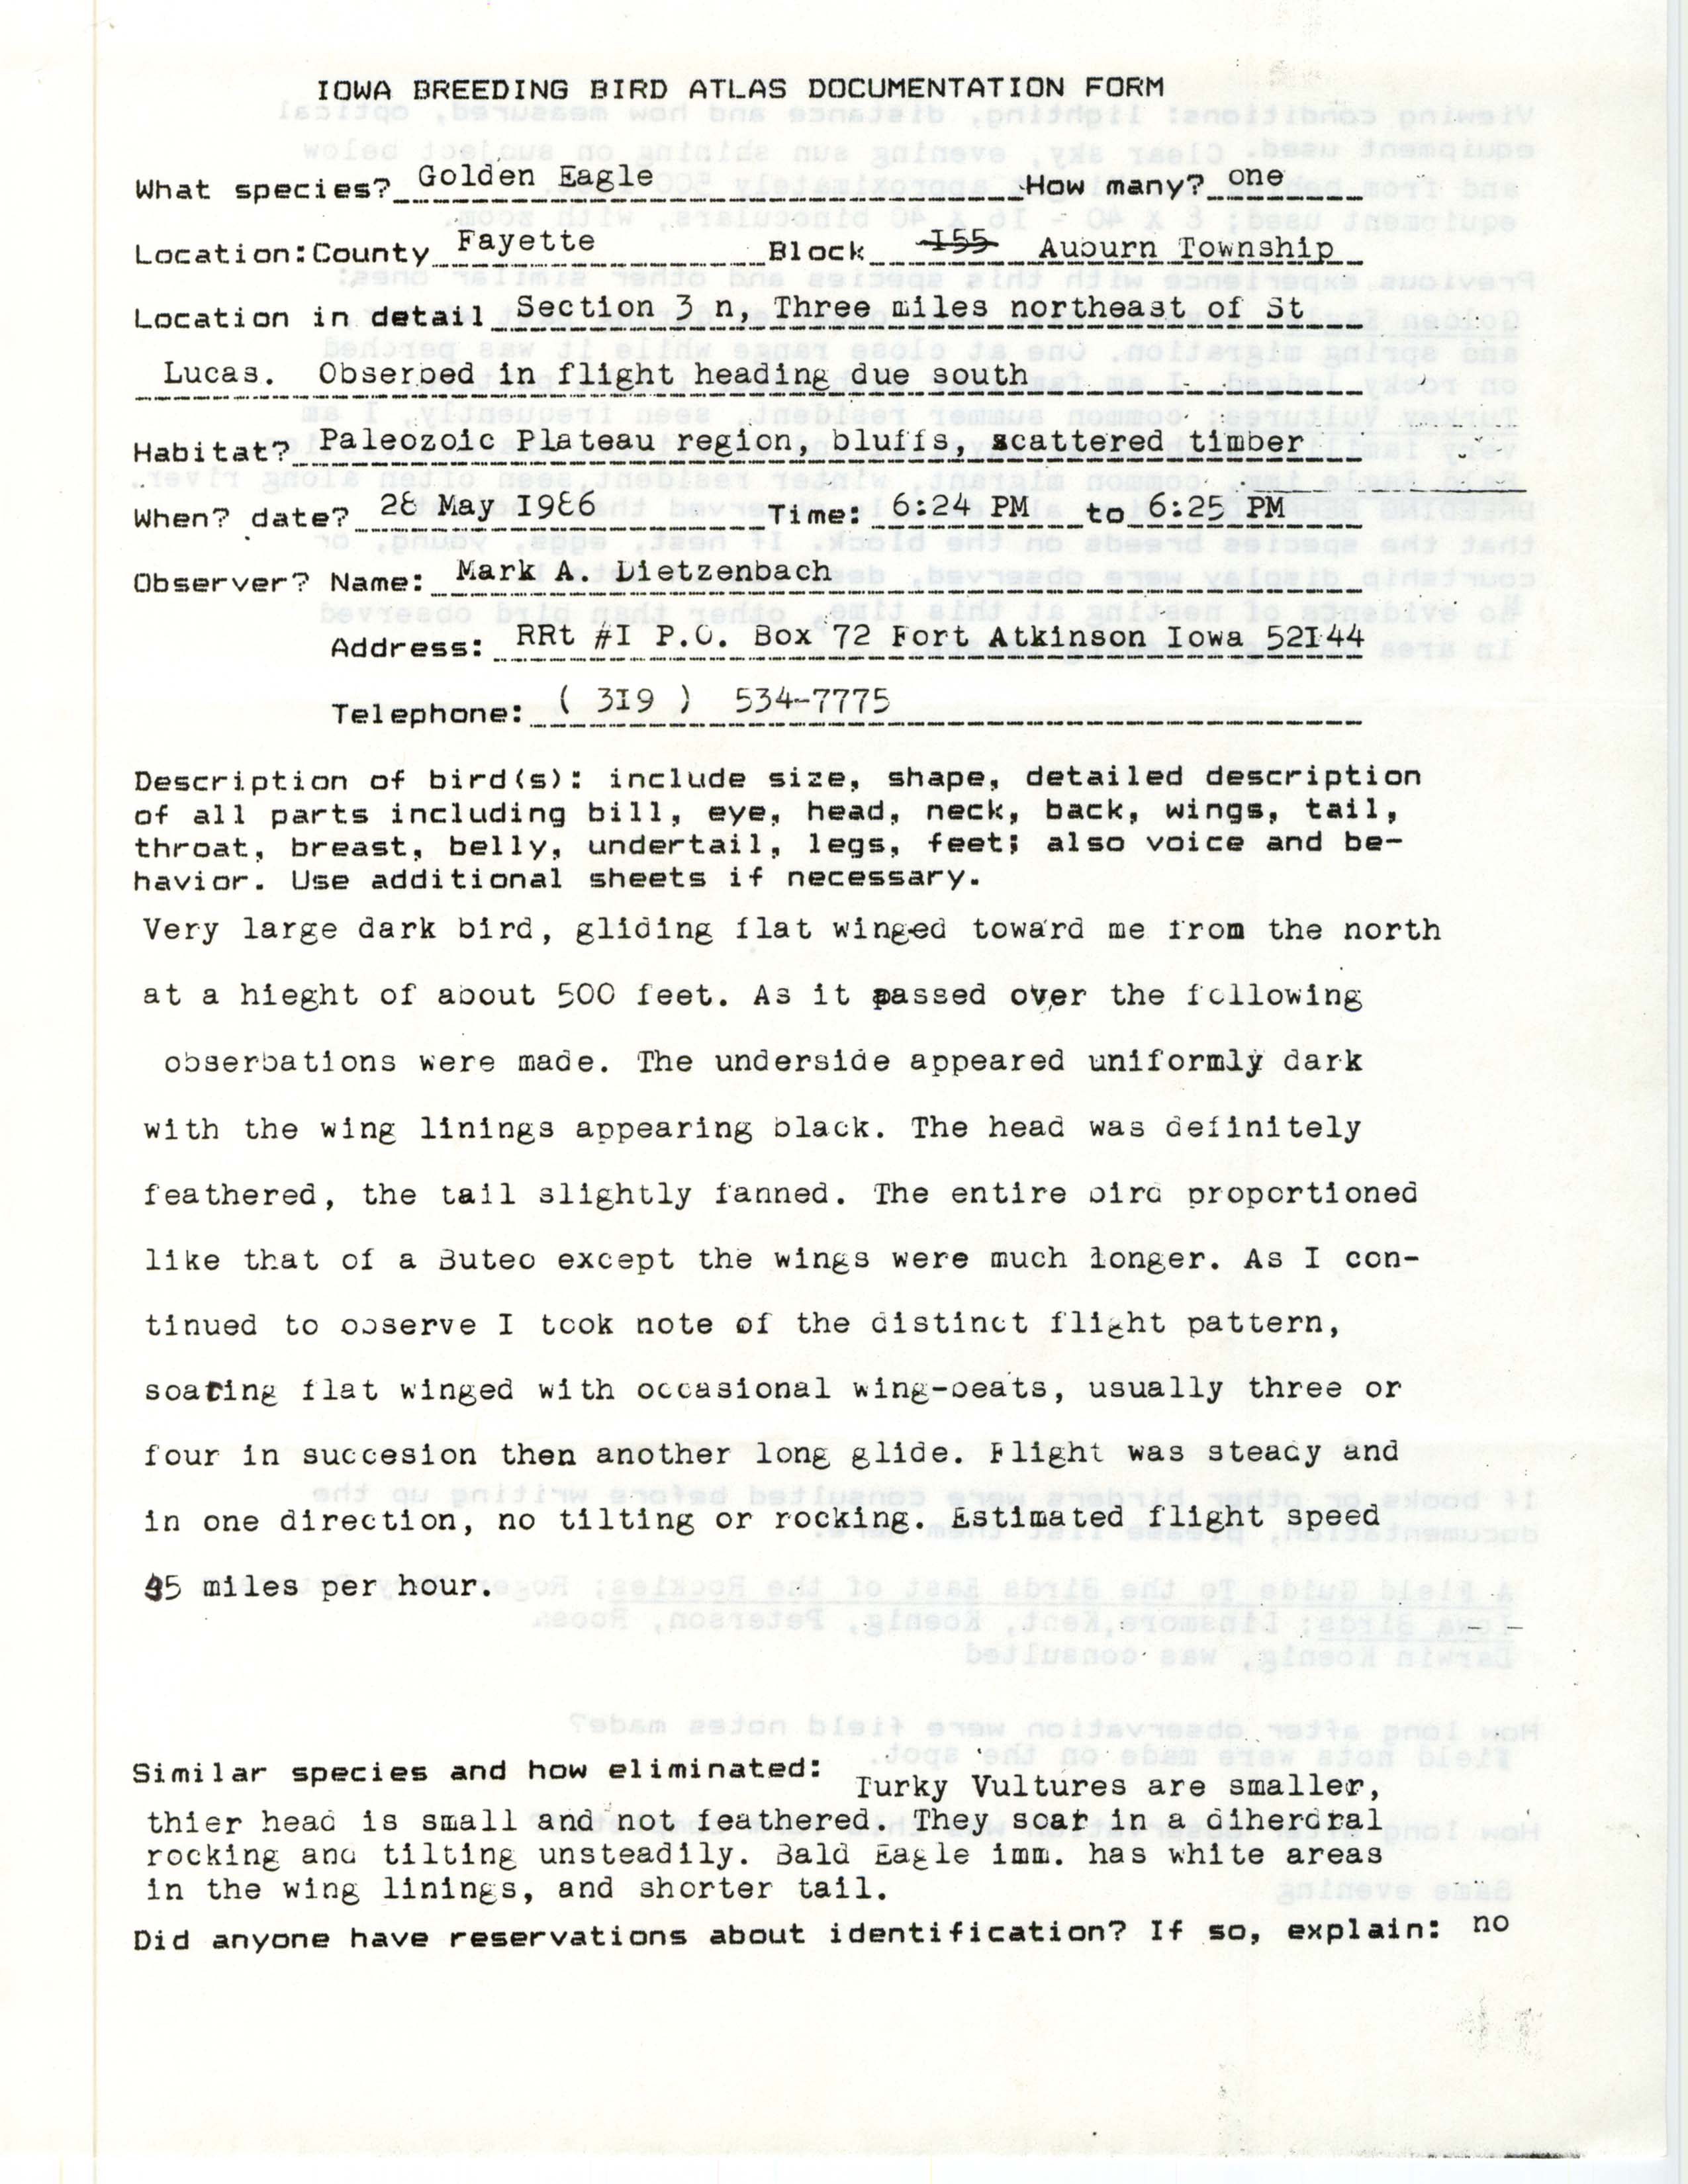 Rare bird documentation form for Golden Eagle near St. Lucas, 1986